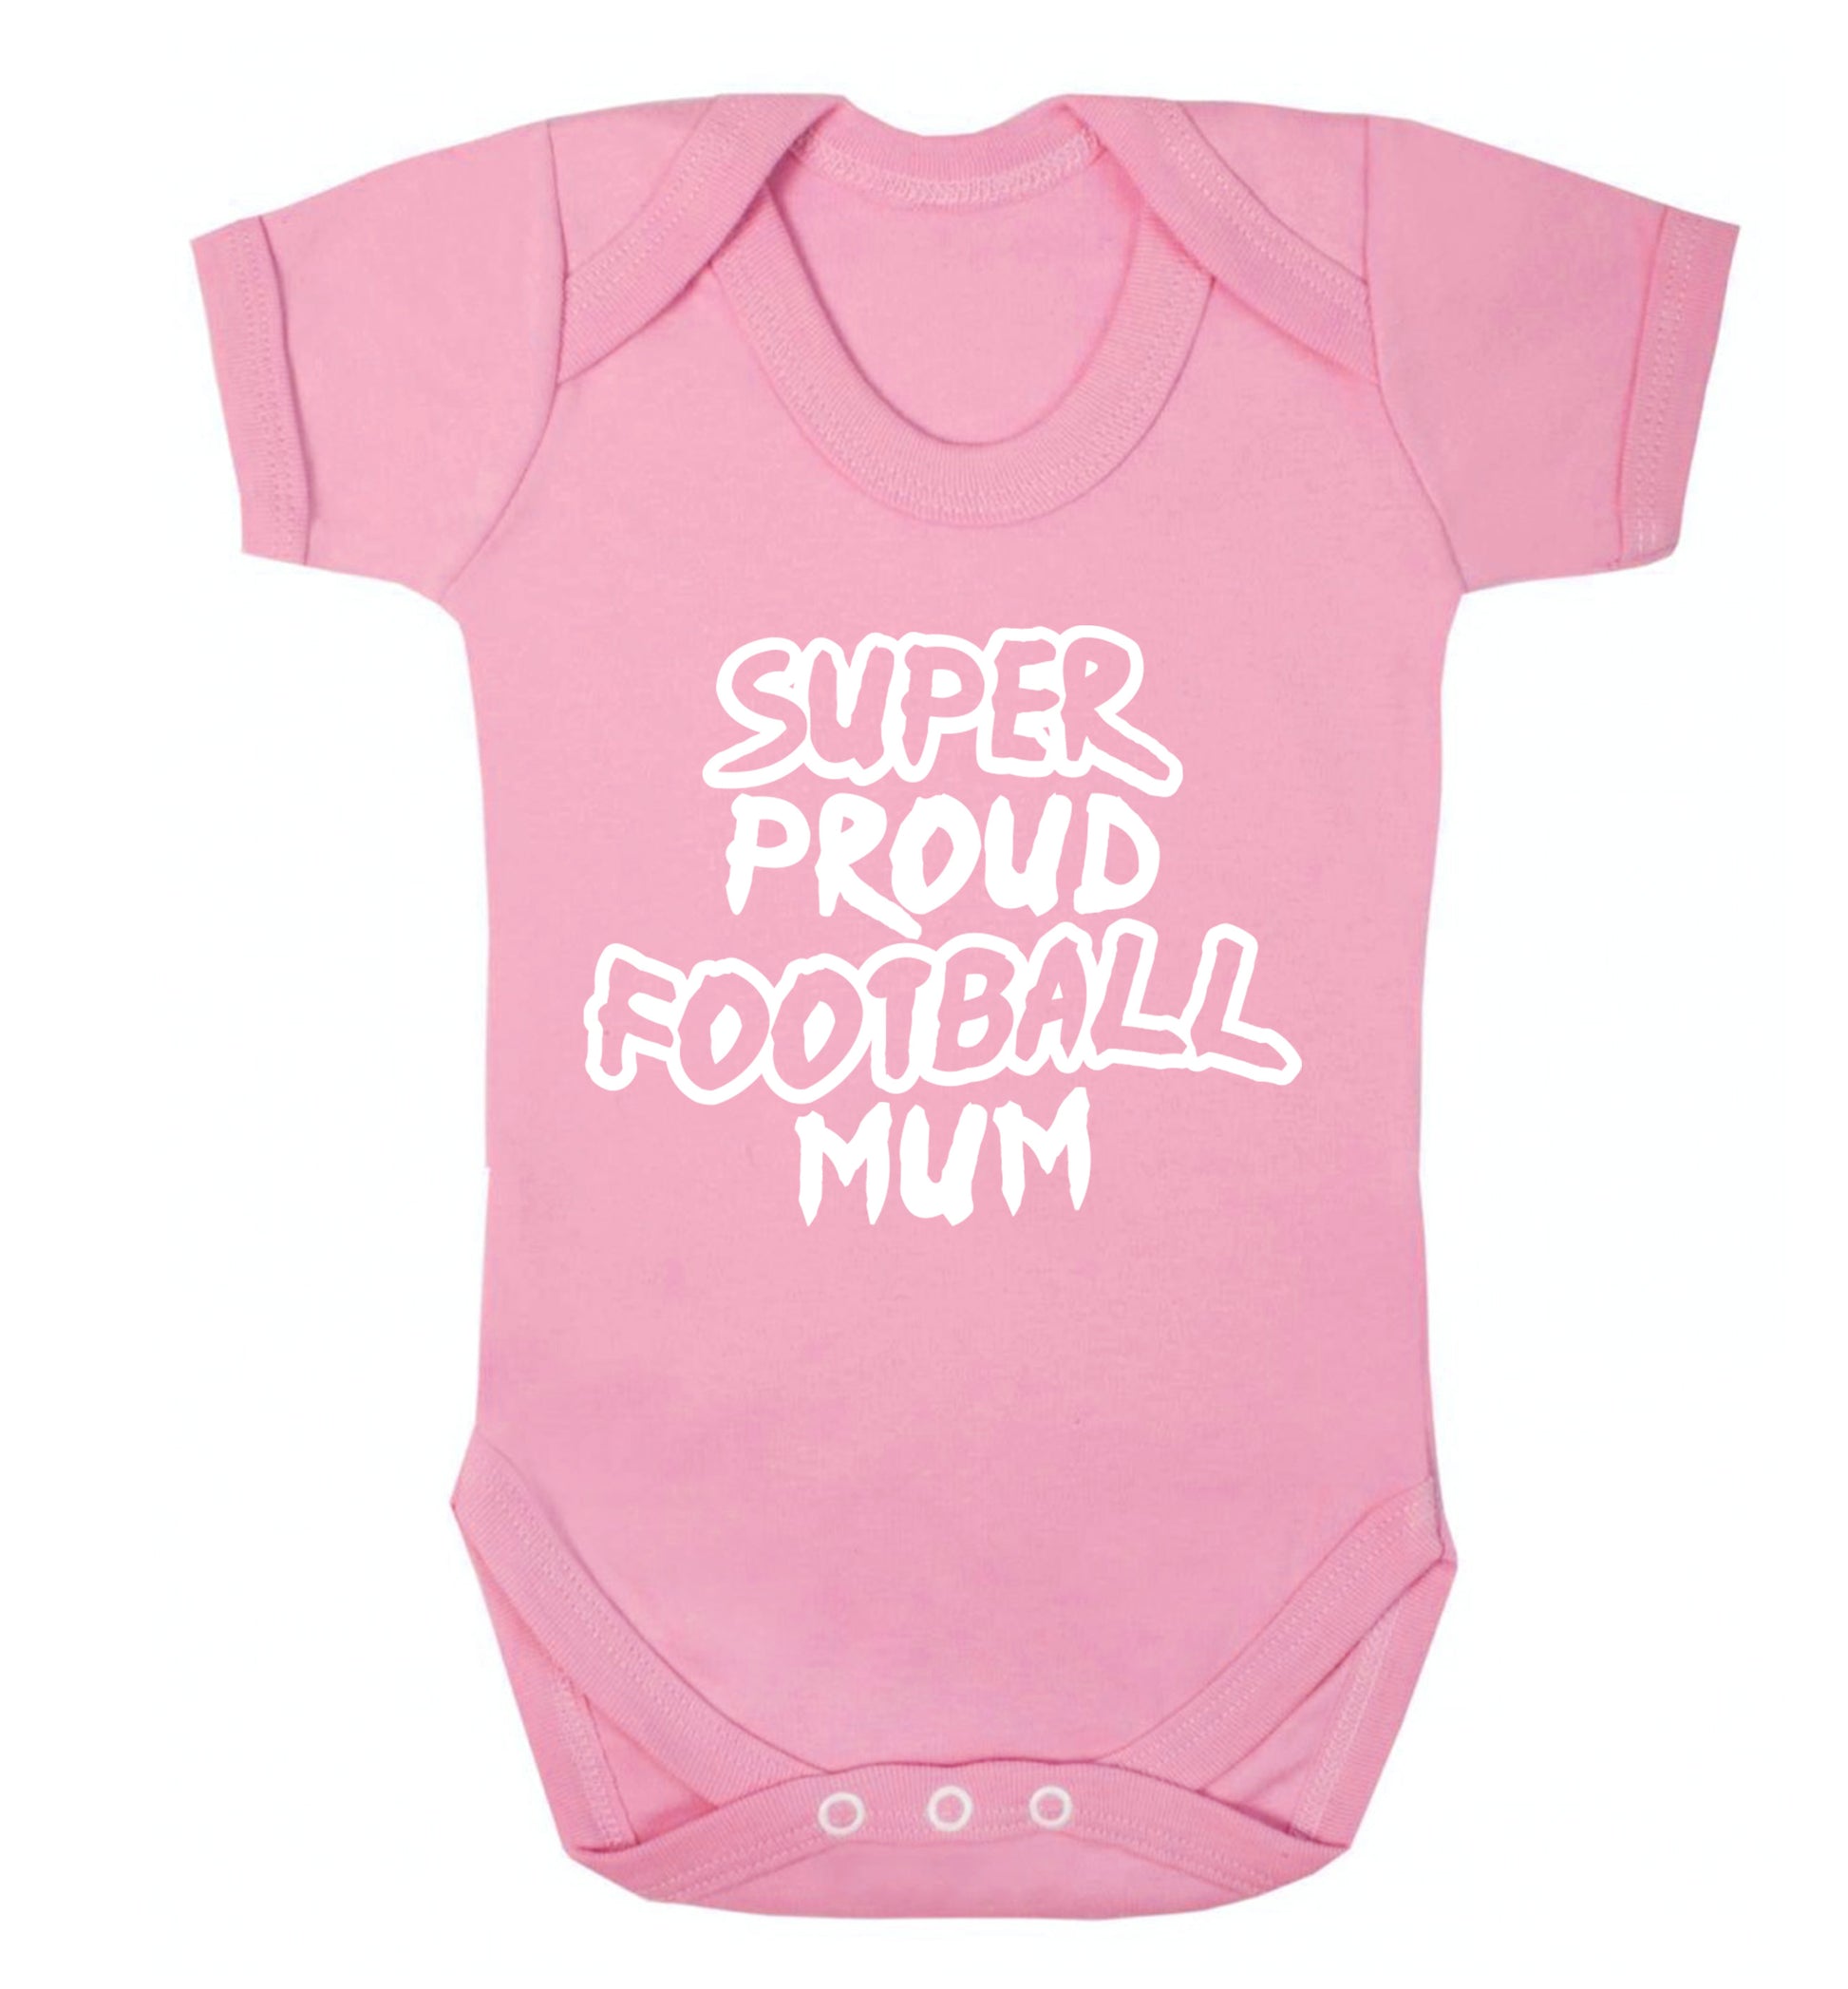 Super proud football mum Baby Vest pale pink 18-24 months